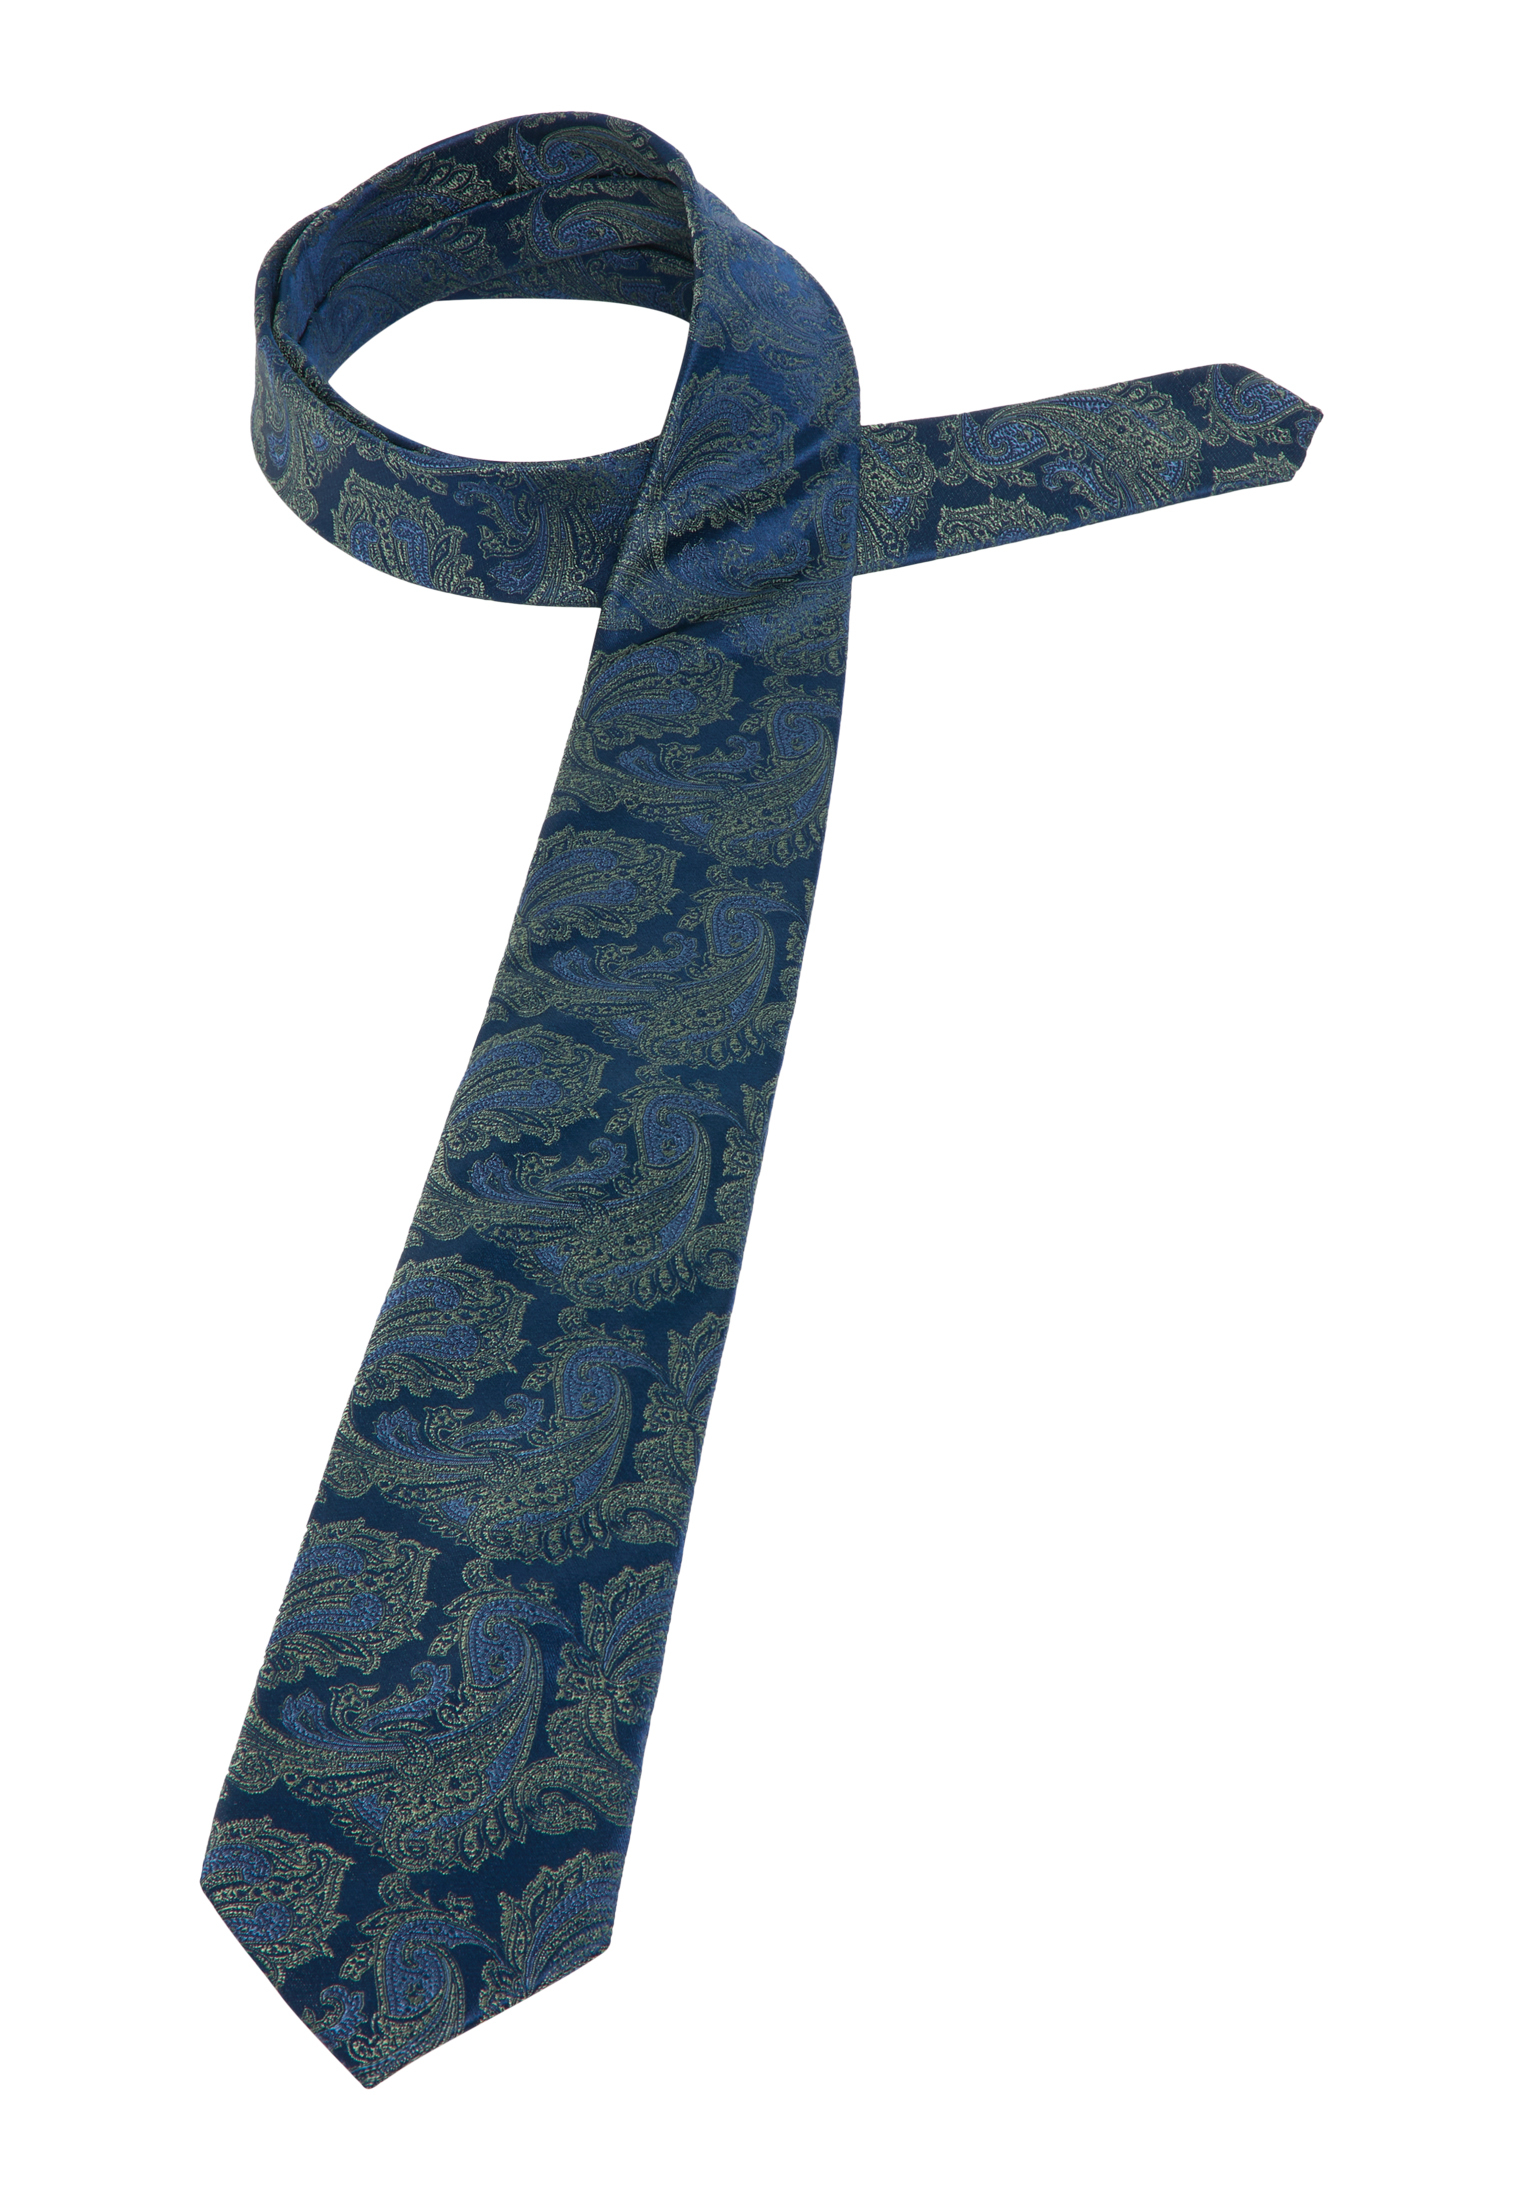 Krawatte in blau/grün gemustert | blau/grün | 142 | 1AC01884-81-48-142 | Breite Krawatten